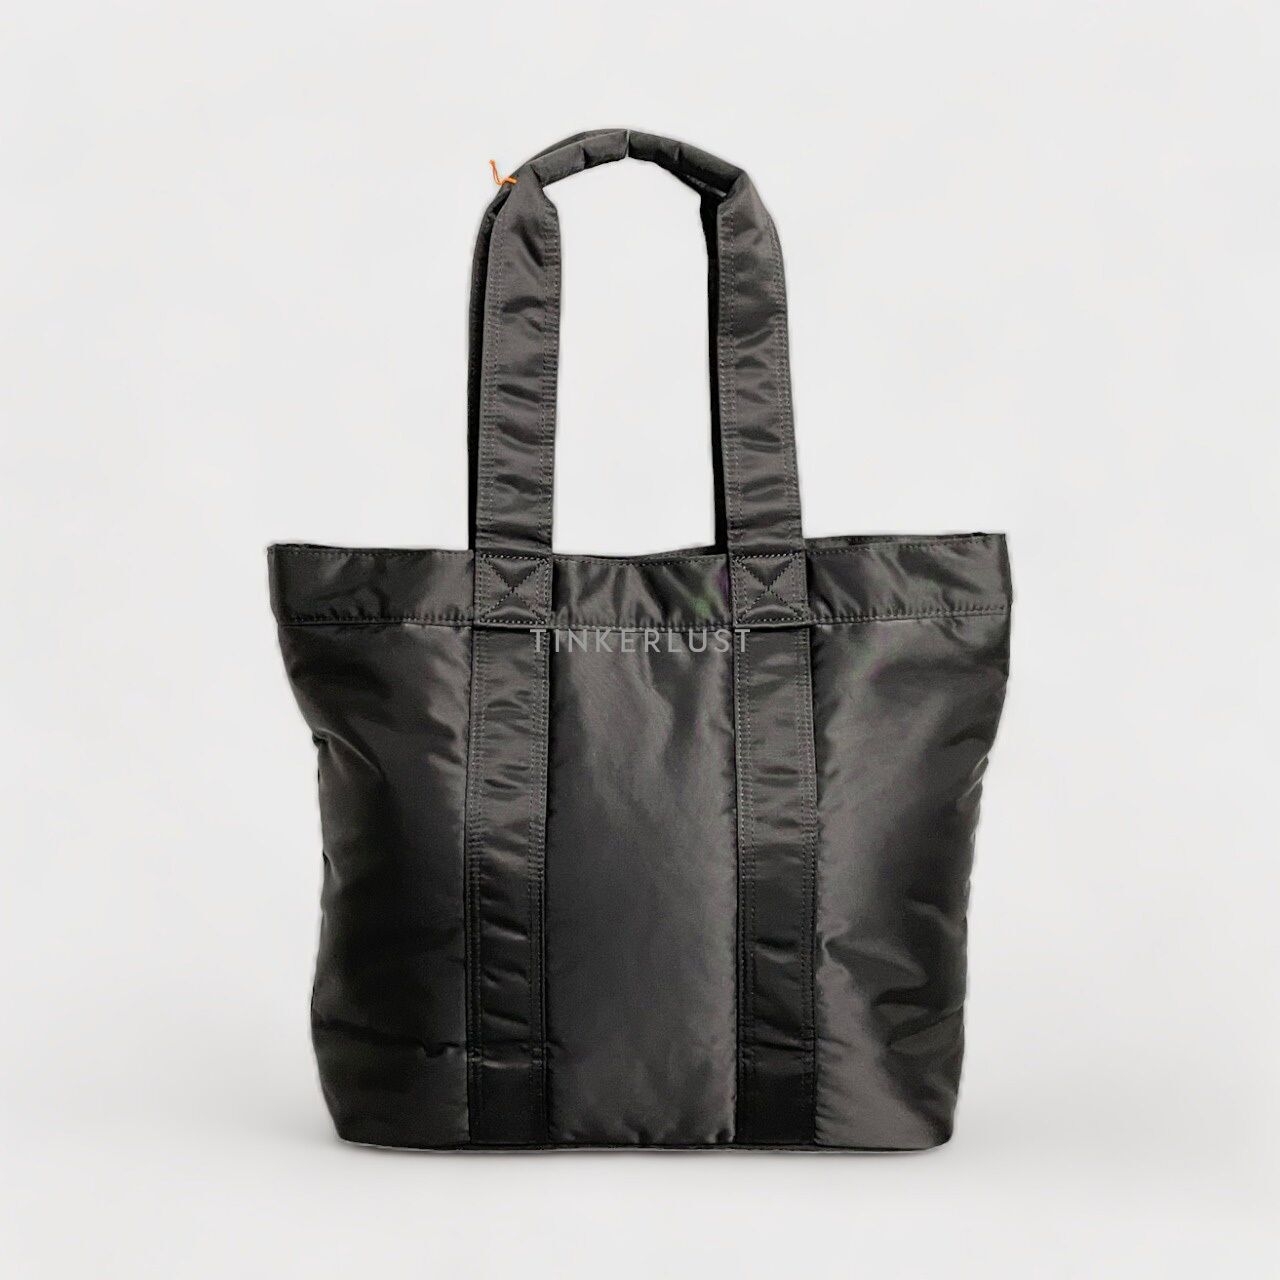 porter Yoshida & Co. Black Tote Bag